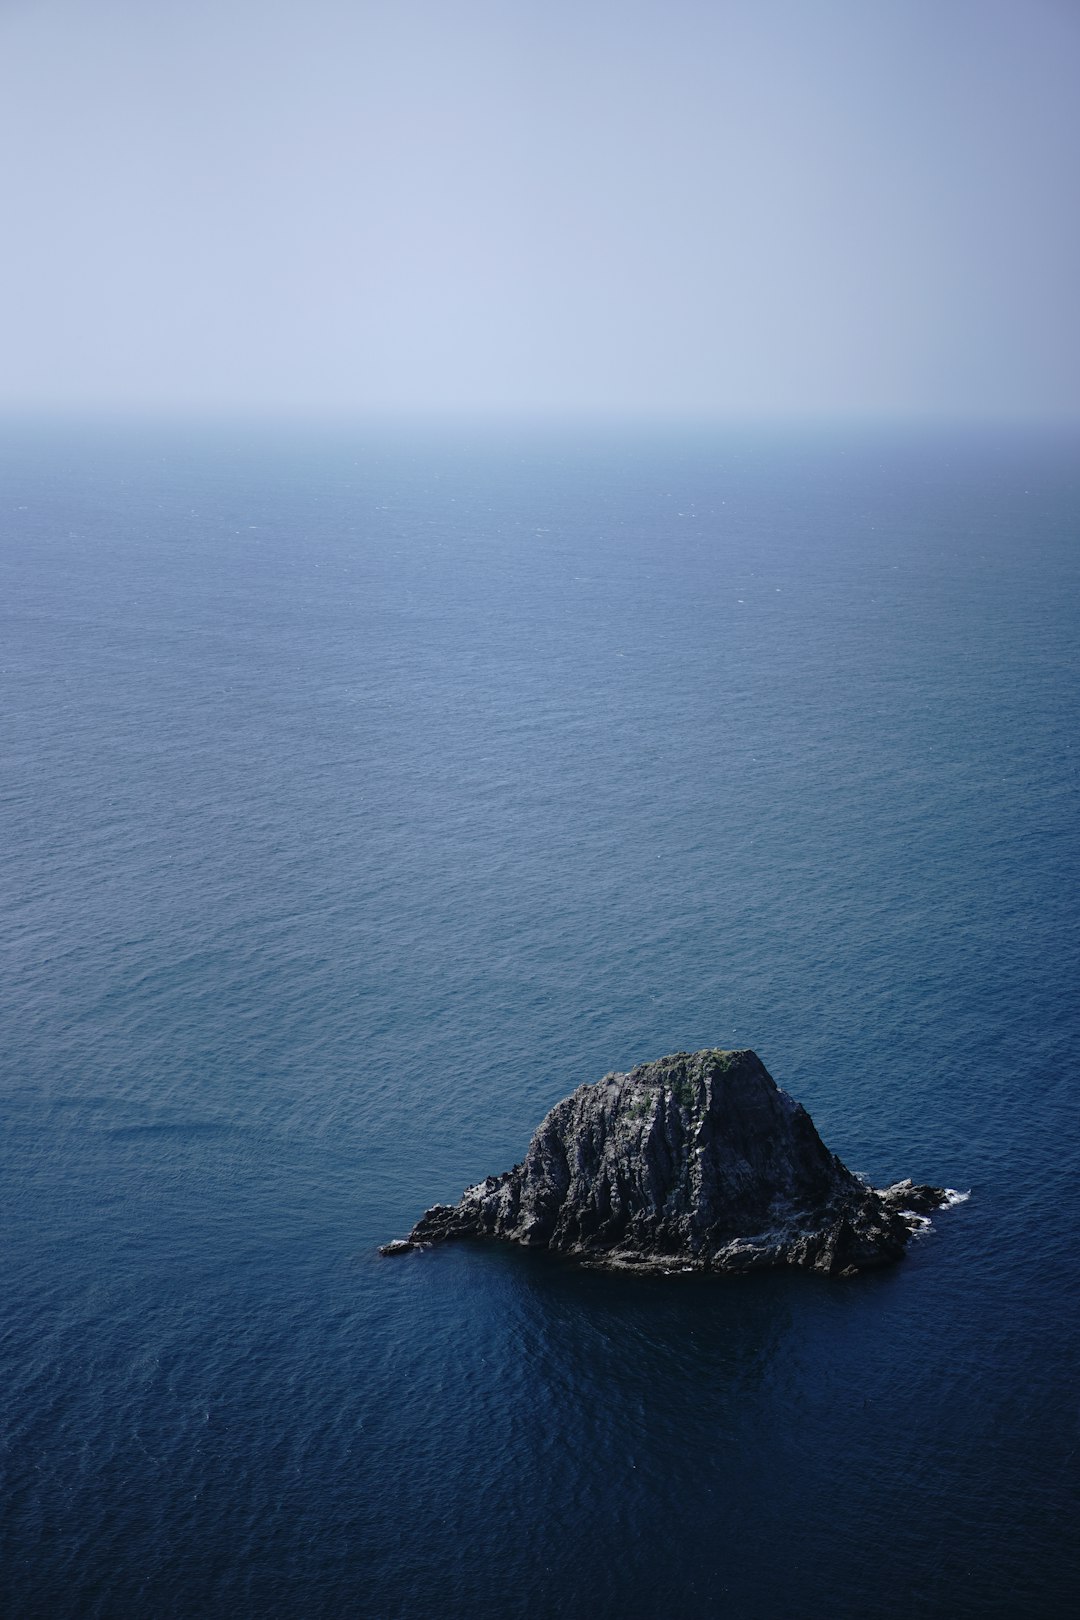 black rock formation on blue sea during daytime